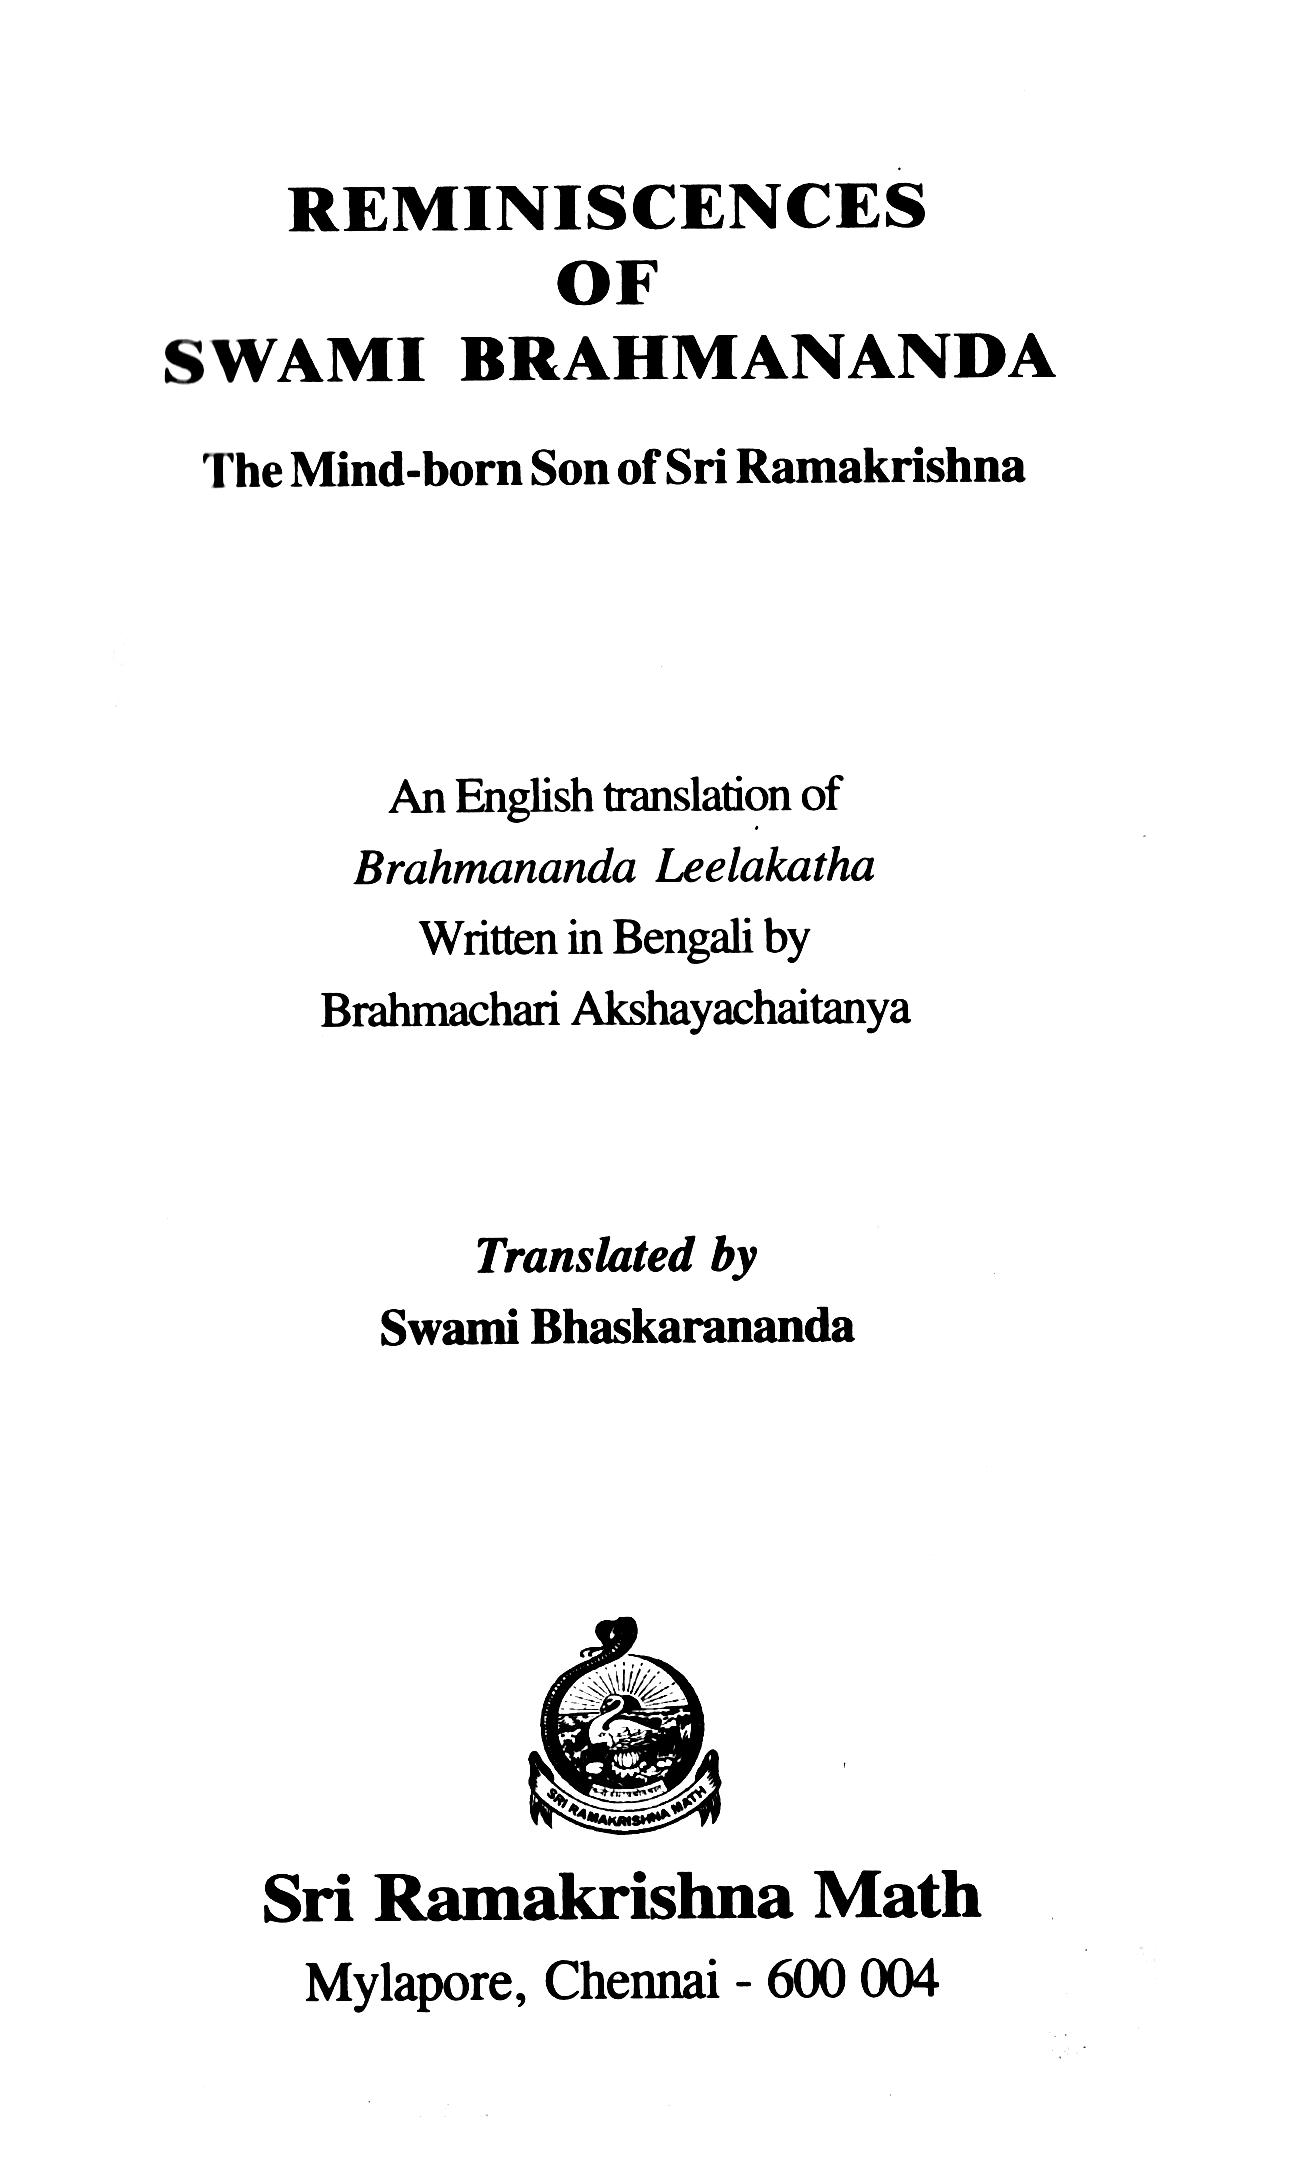 Reminiscences of Swami Brahmananda